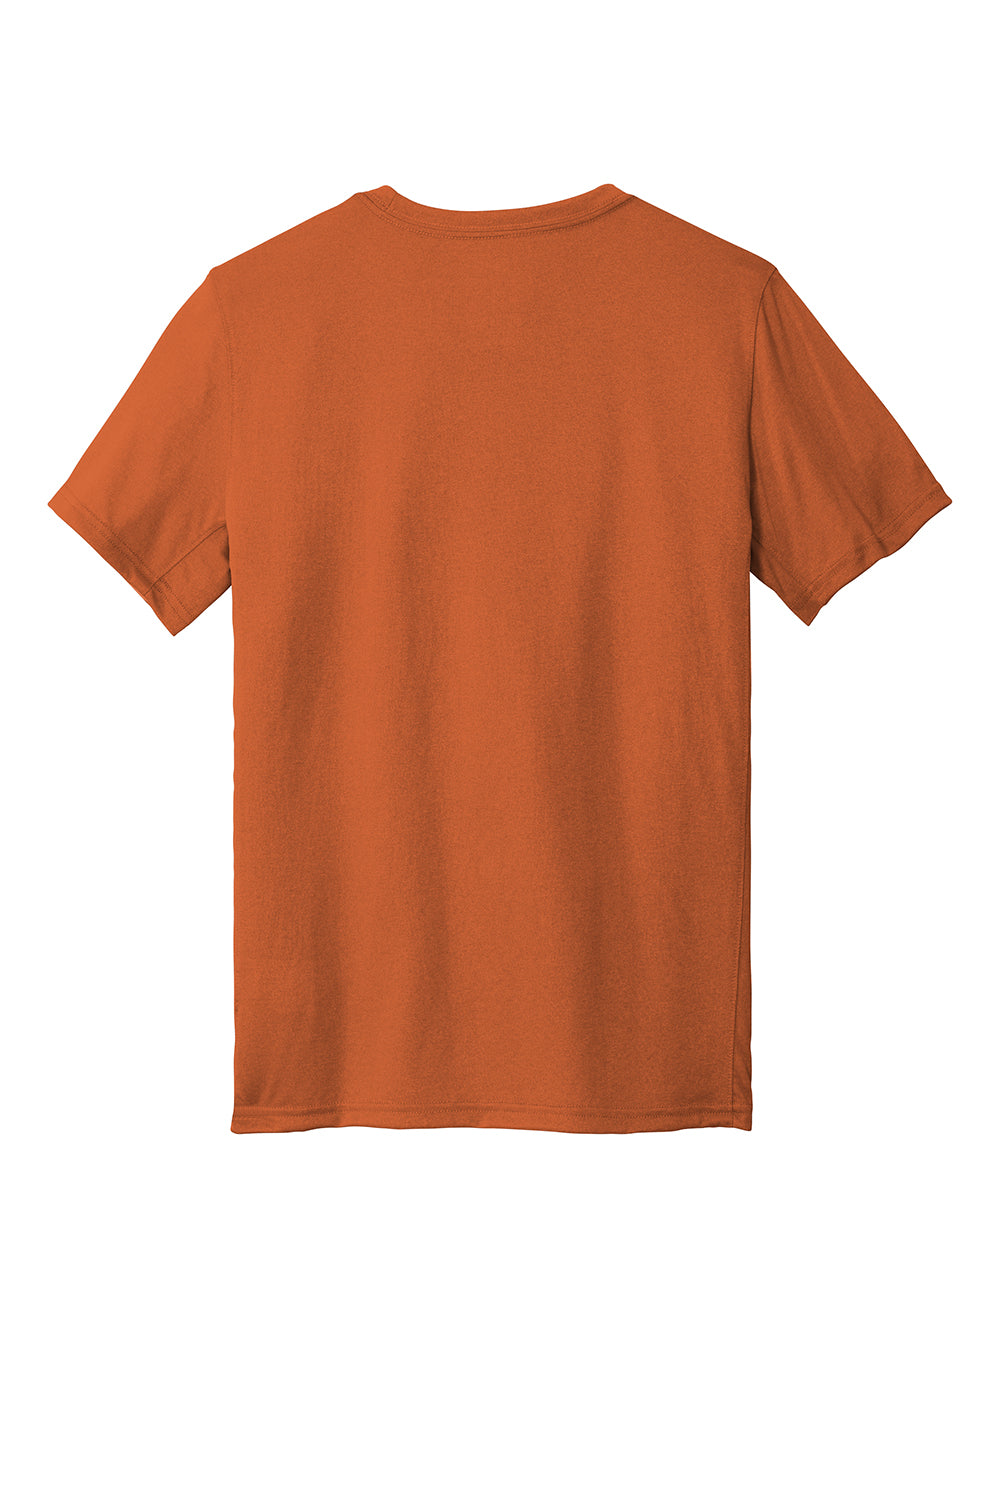 Nike DV7299 Mens Team rLegend Dri-Fit Moisture Wicking Short Sleeve Crewneck T-Shirt Desert Orange Flat Back